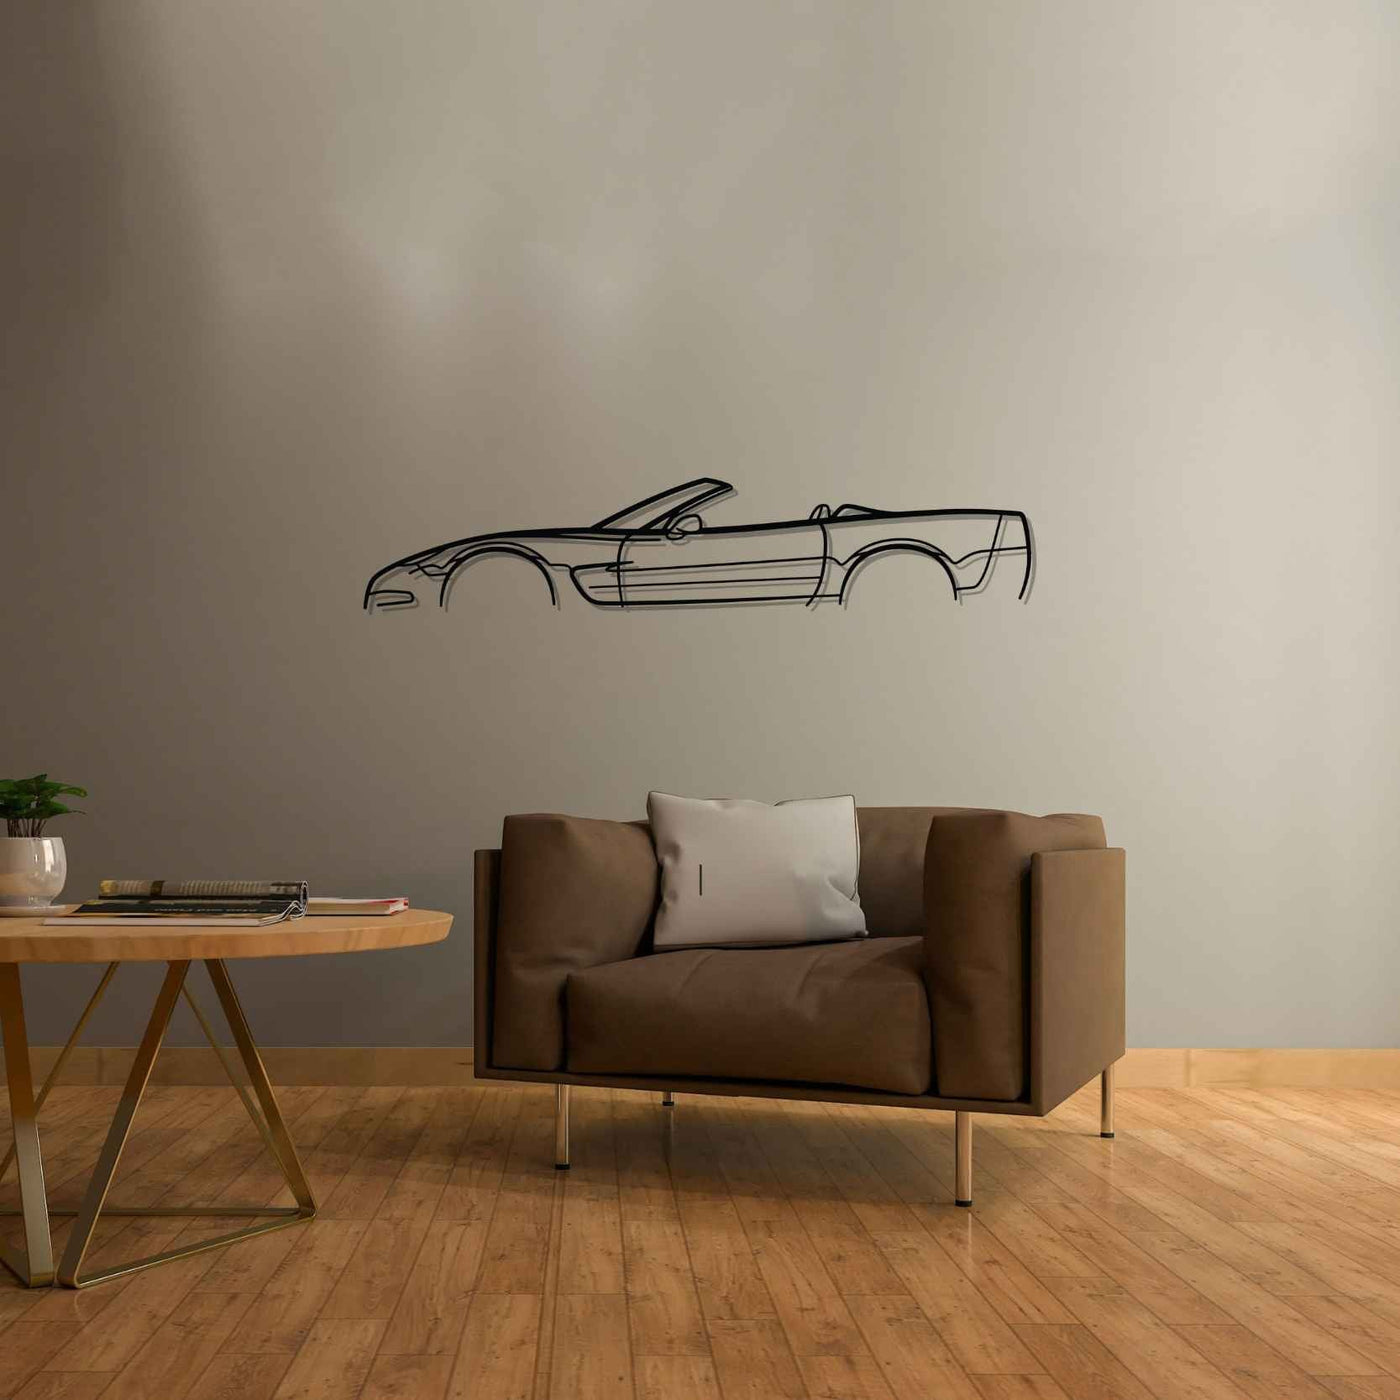 C5 Cabrio 2002 Silhouette Metal Wall Art